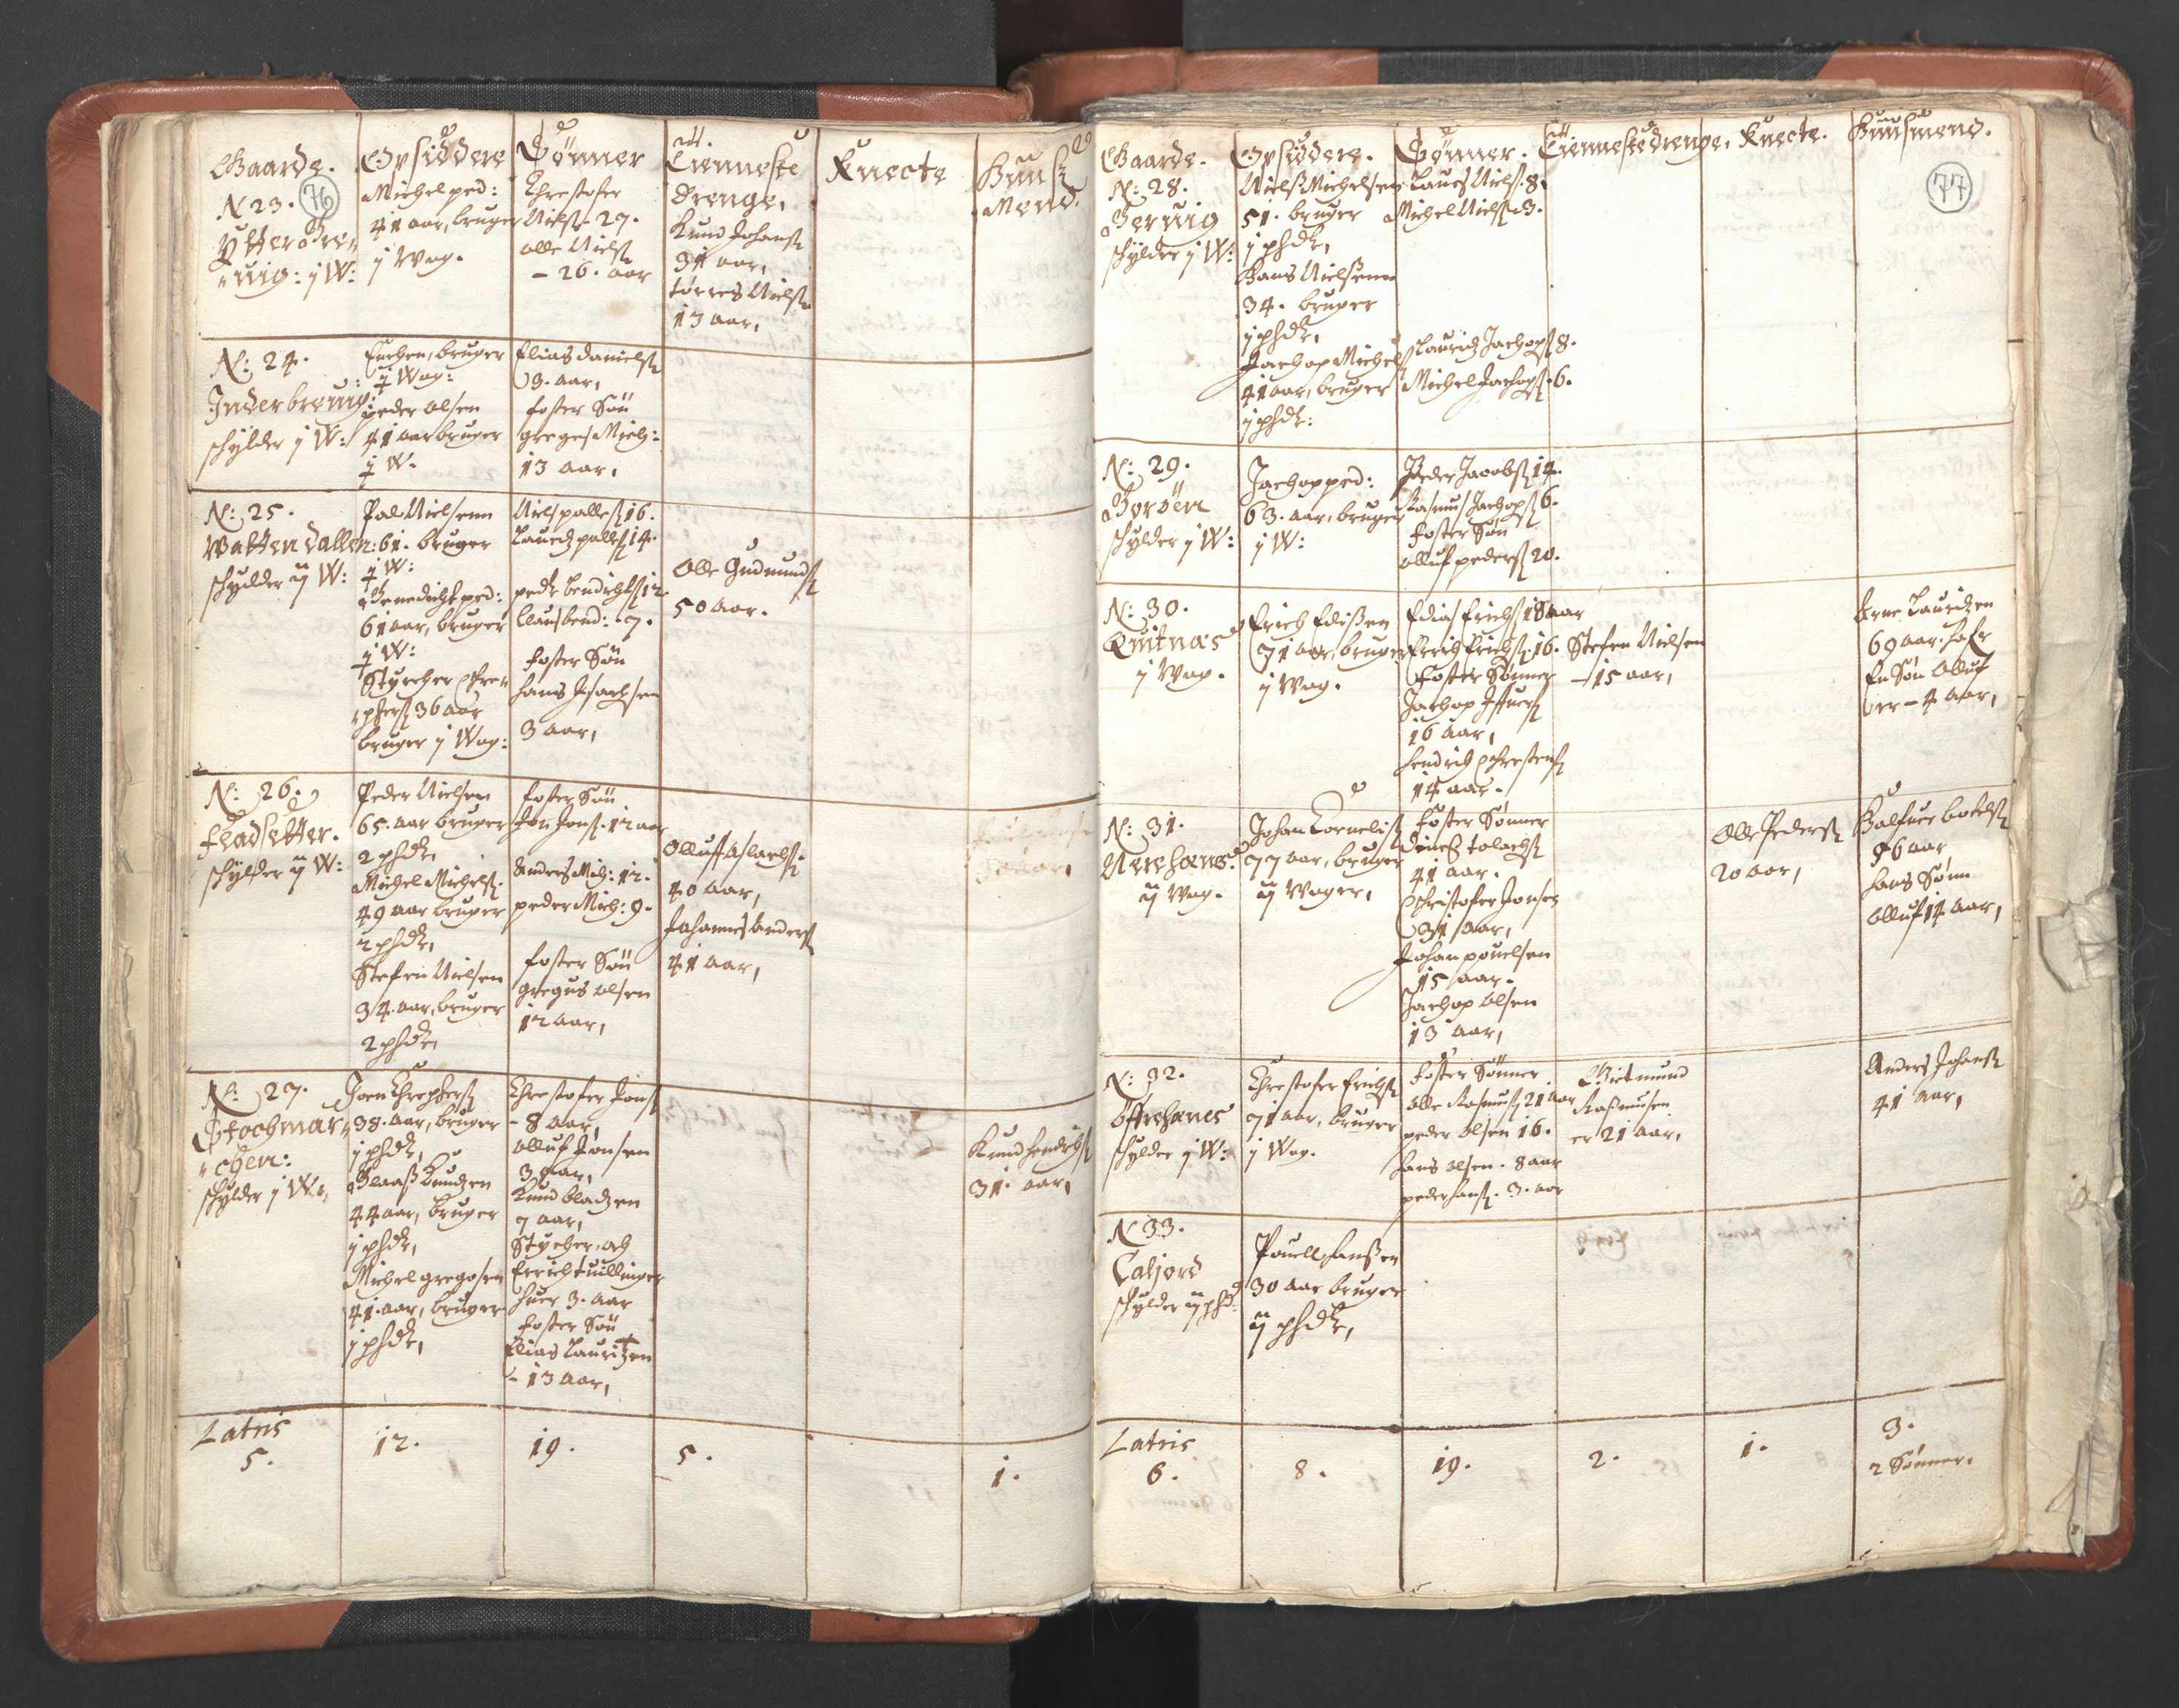 RA, Vicar's Census 1664-1666, no. 36: Lofoten and Vesterålen deanery, Senja deanery and Troms deanery, 1664-1666, p. 76-77